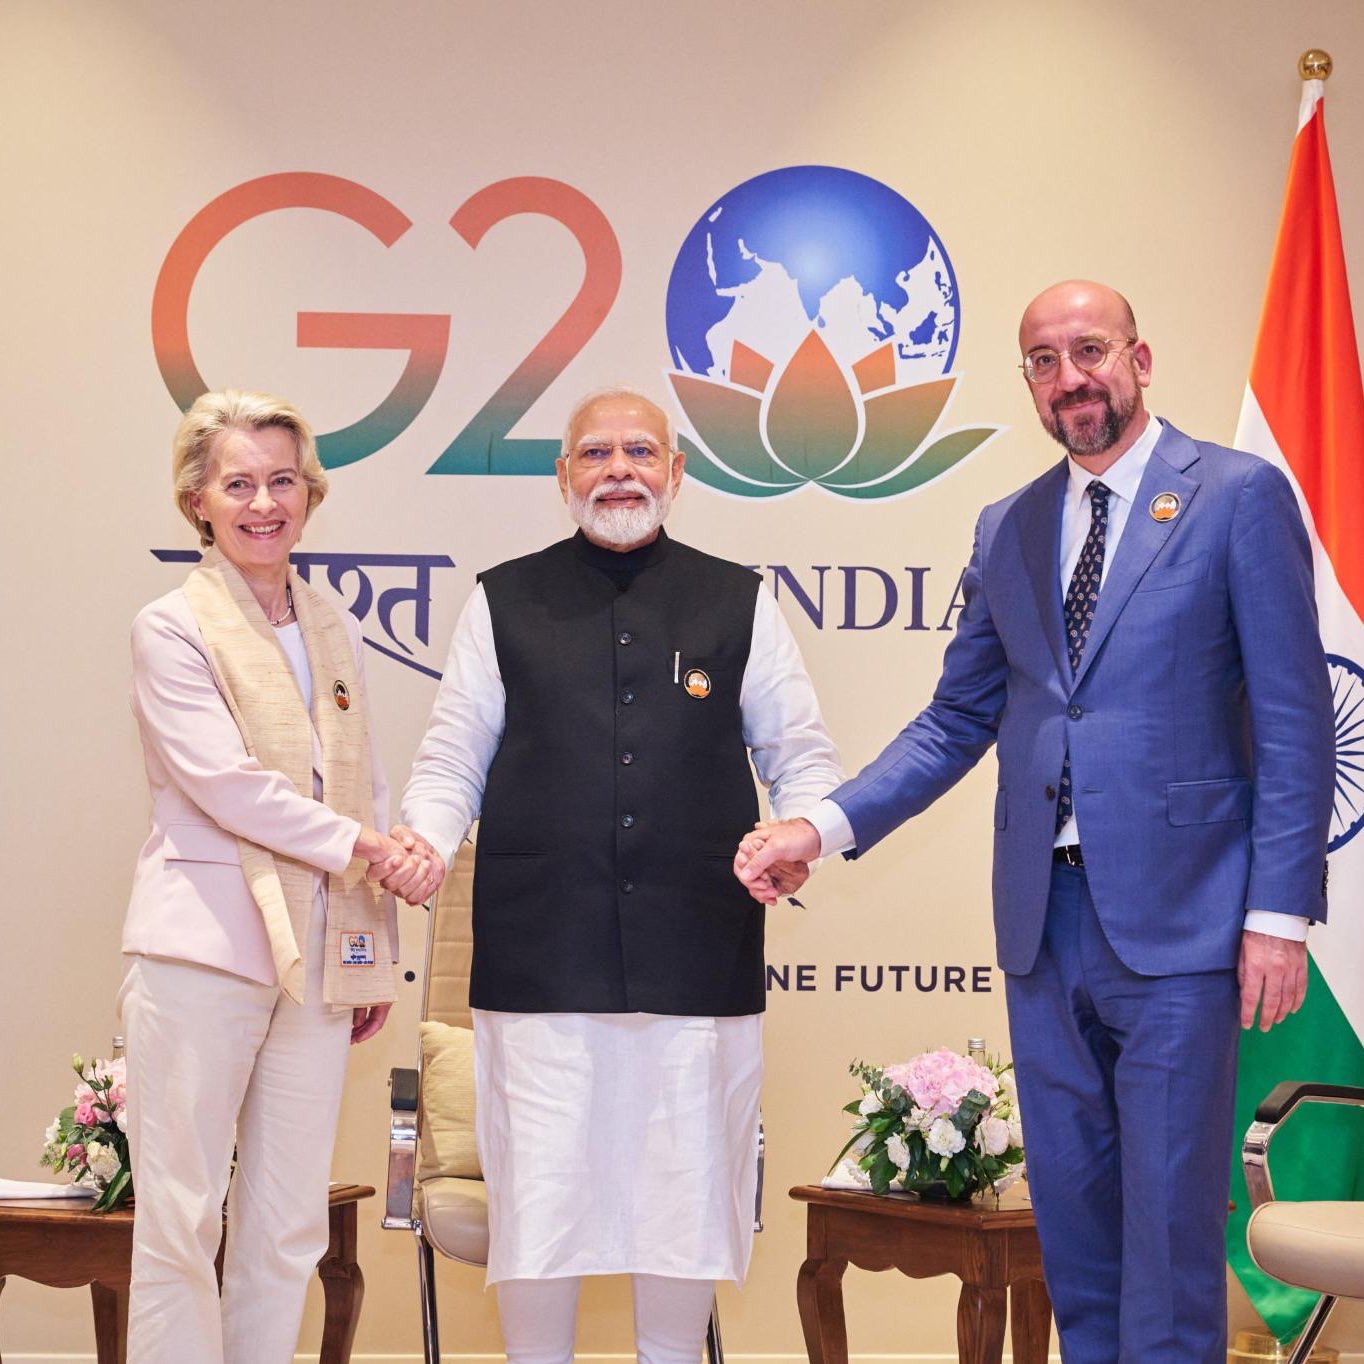 India-Middle East-Europe Economic Corridor